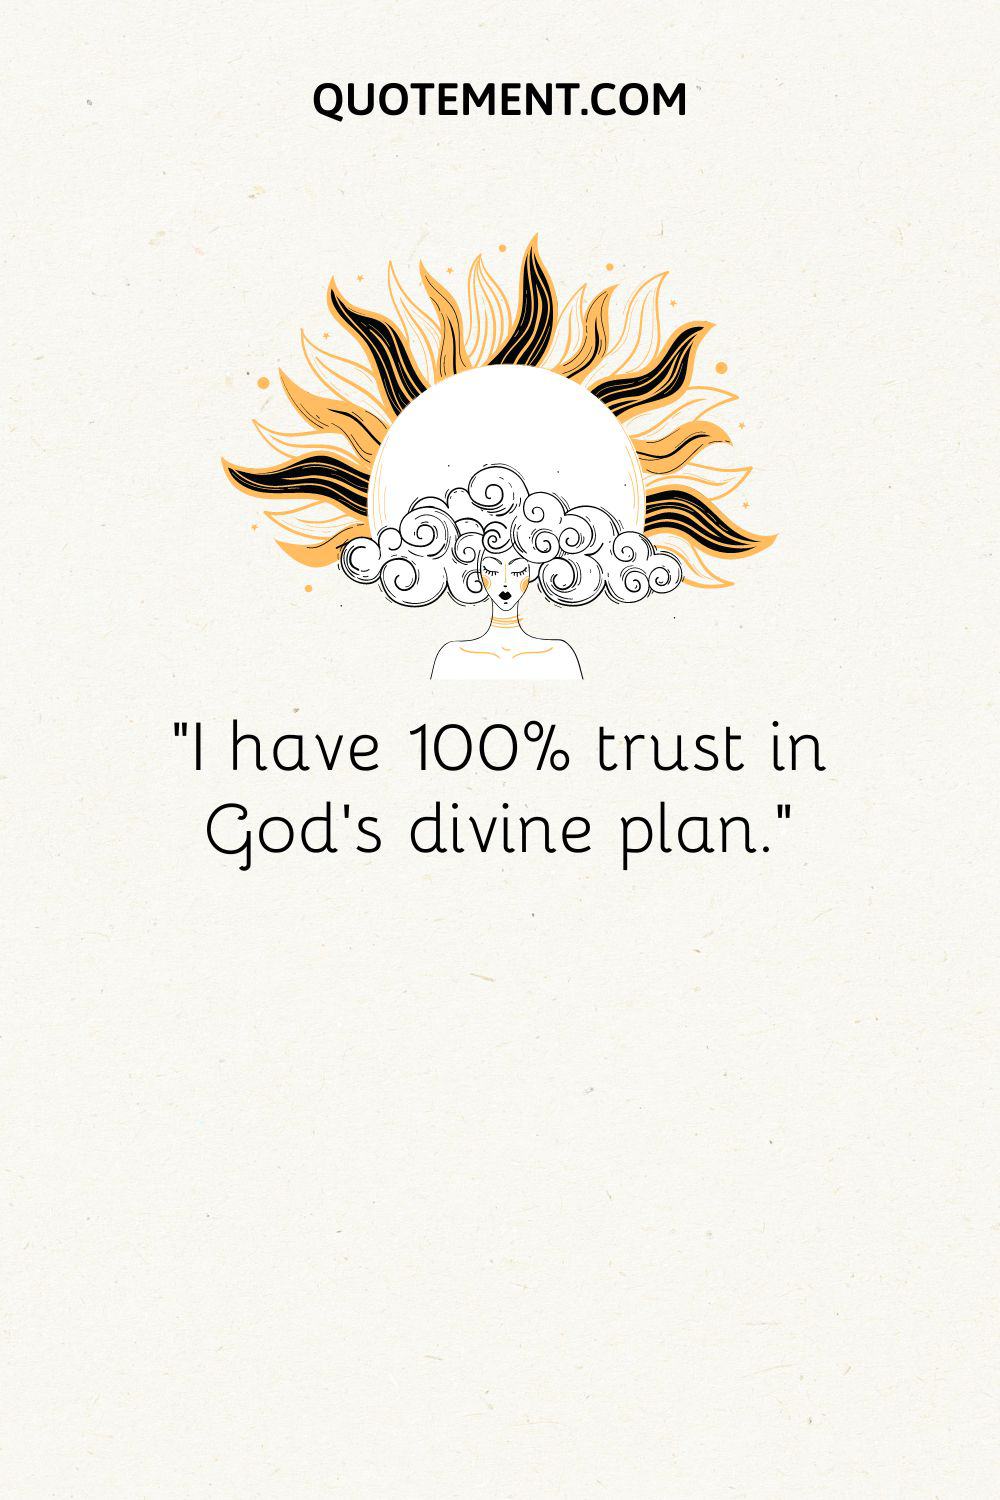 I have 100% trust in God’s divine plan